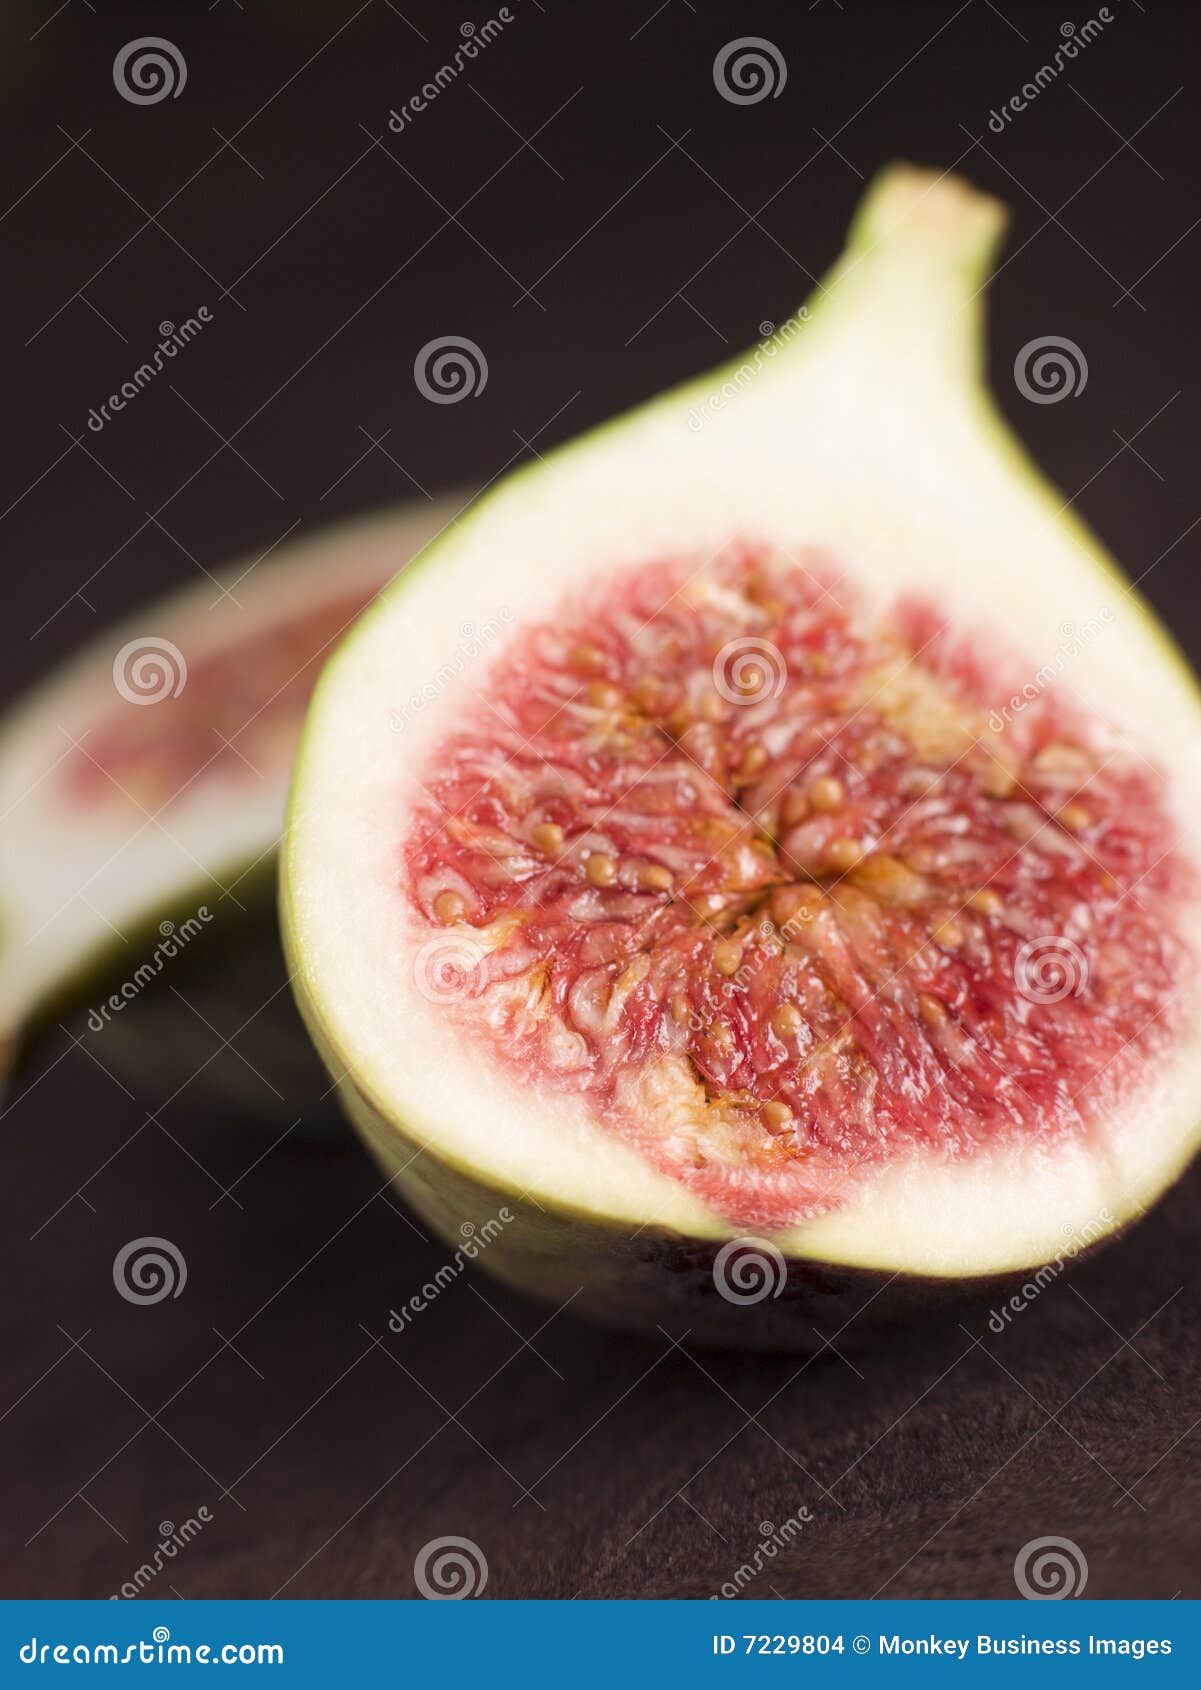 halved fresh fig